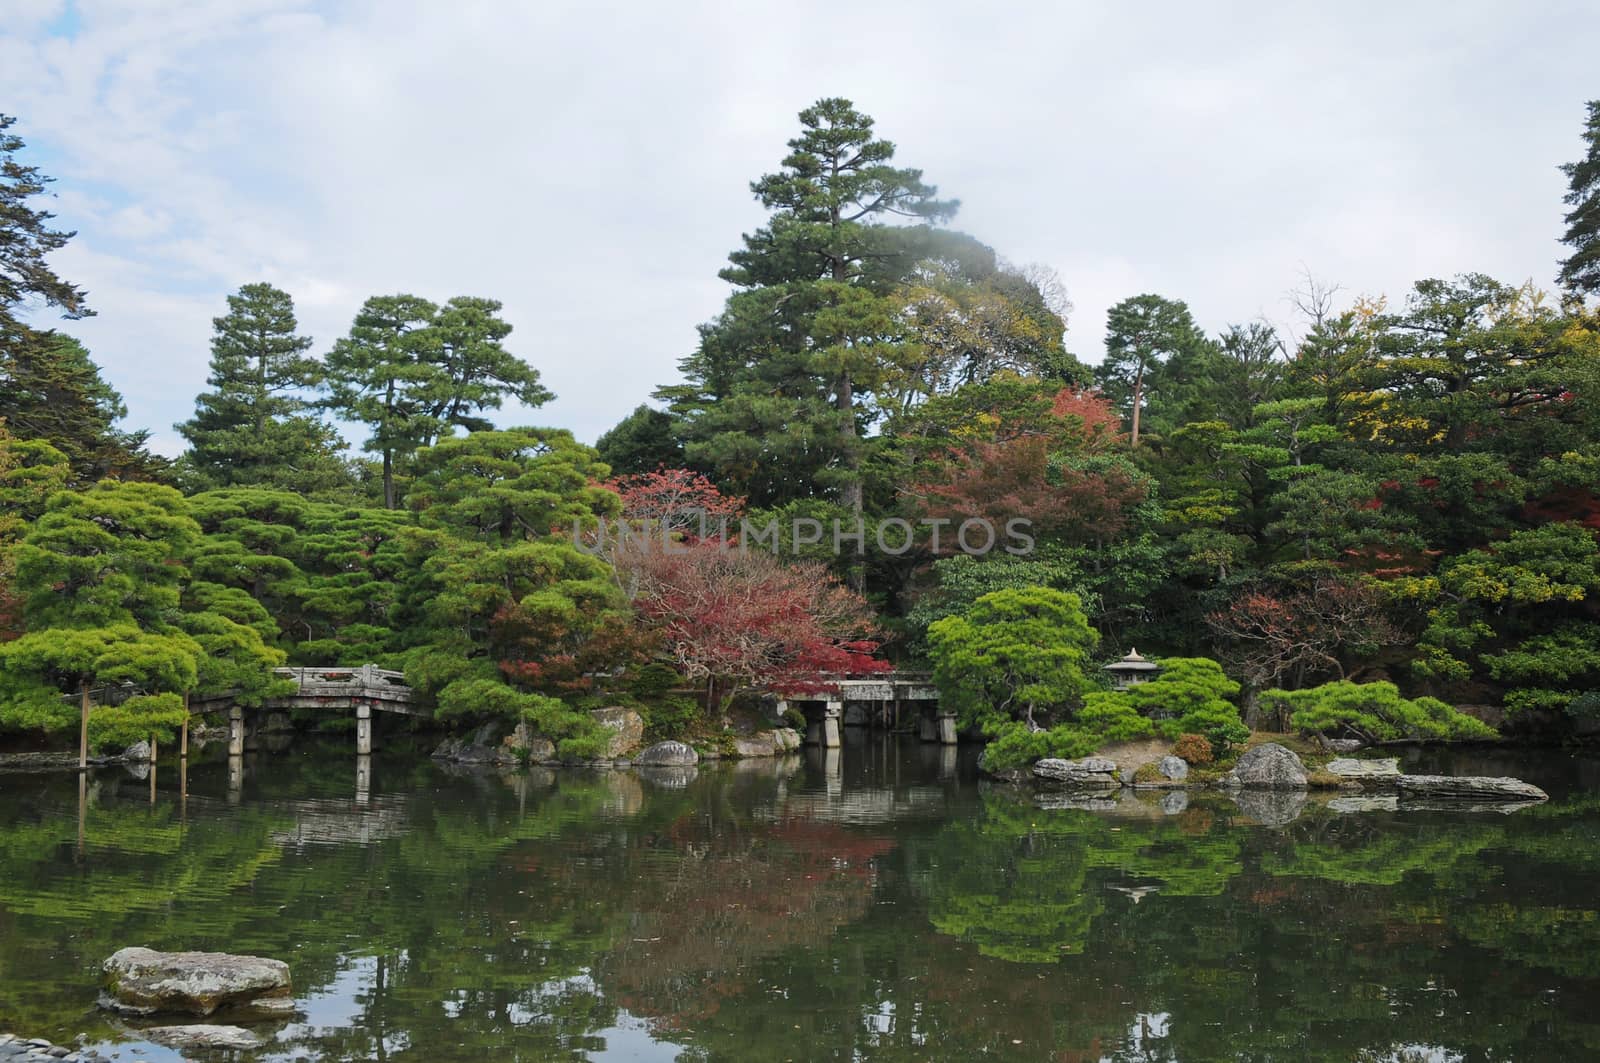 Peaceful Japanese zen garden and pond in Autumn by eyeofpaul